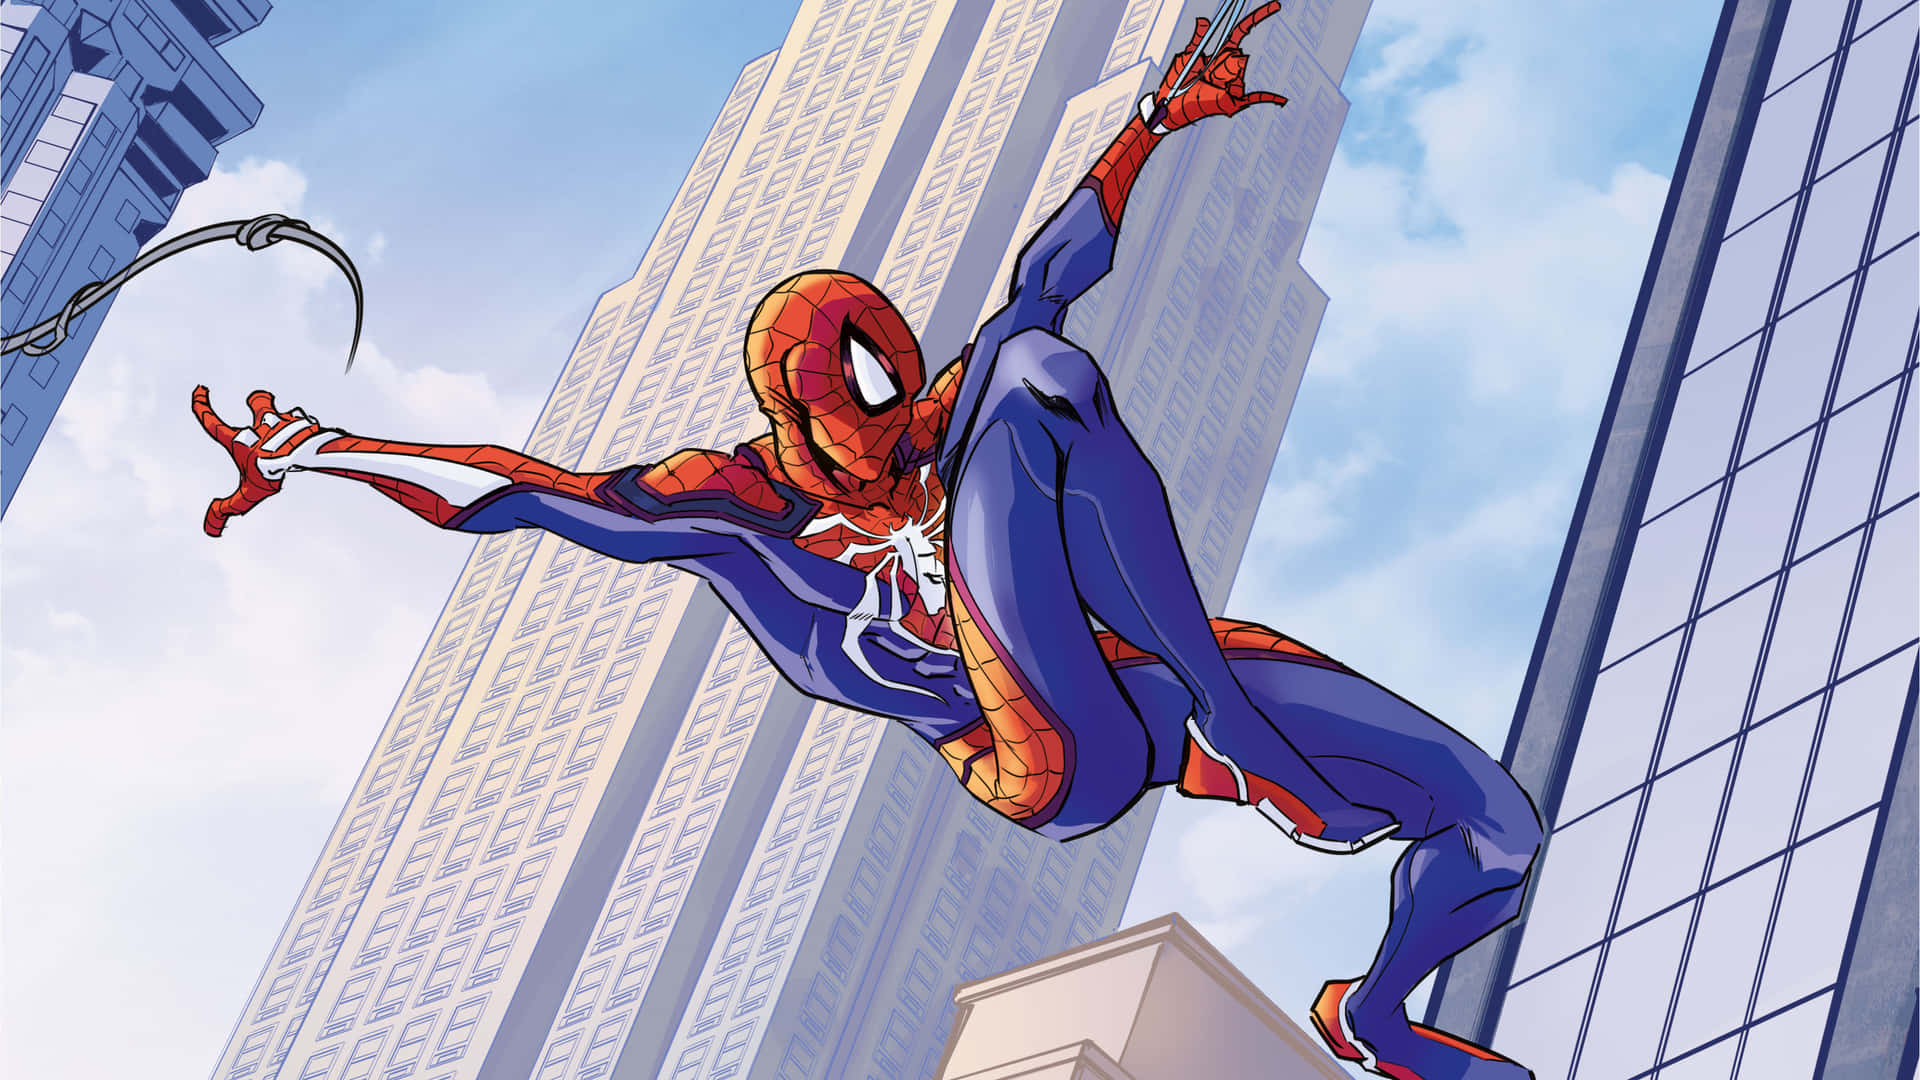 Spider-Man Web-Slinging in Action Wallpaper